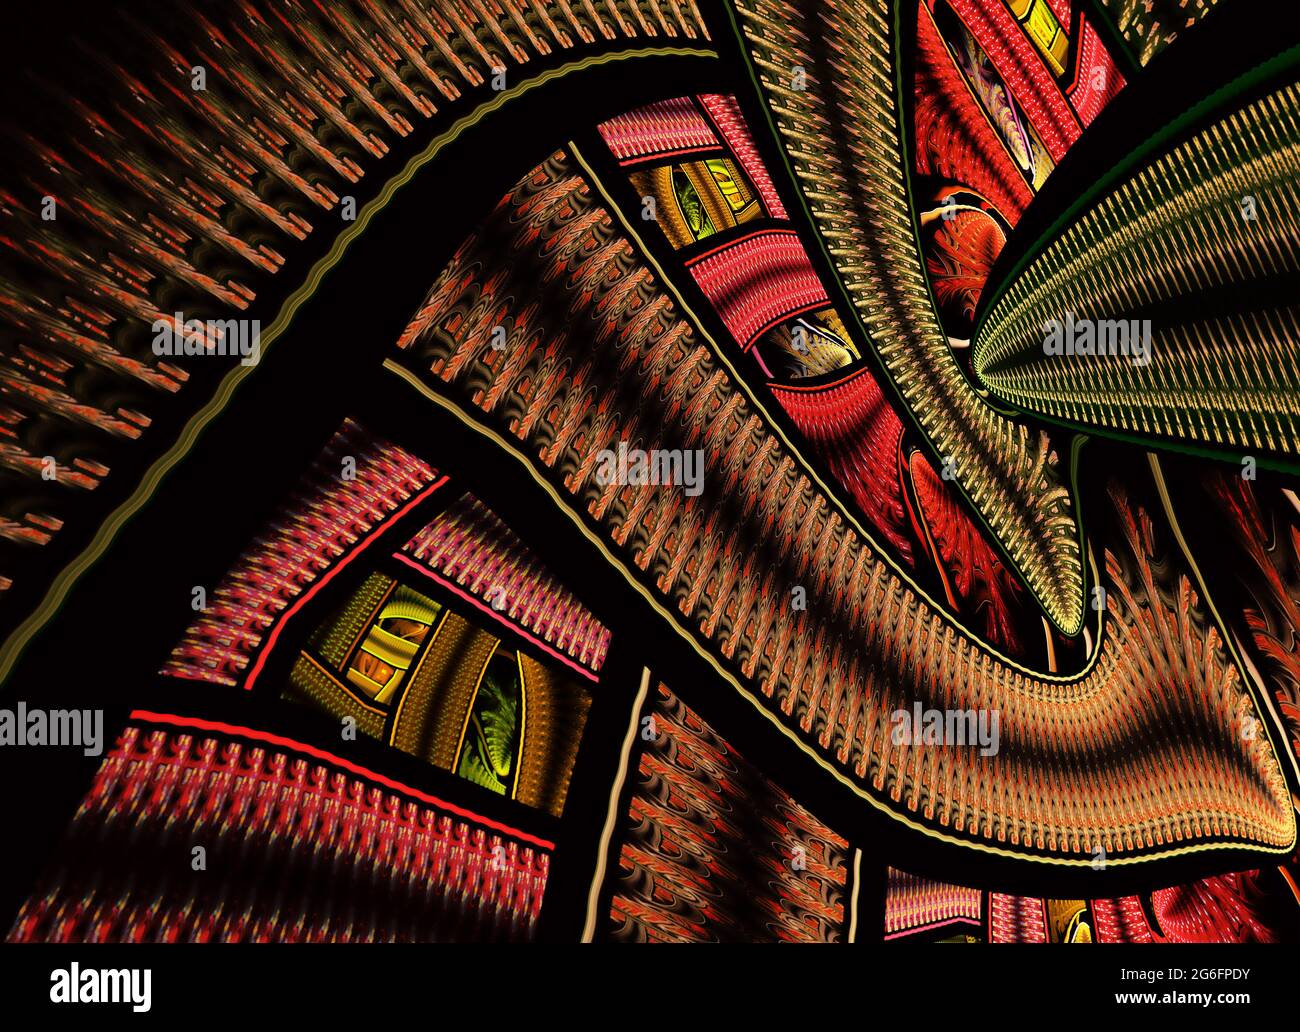 Abstract Digital Fractal Spiral Art On Stock Illustration 173694671